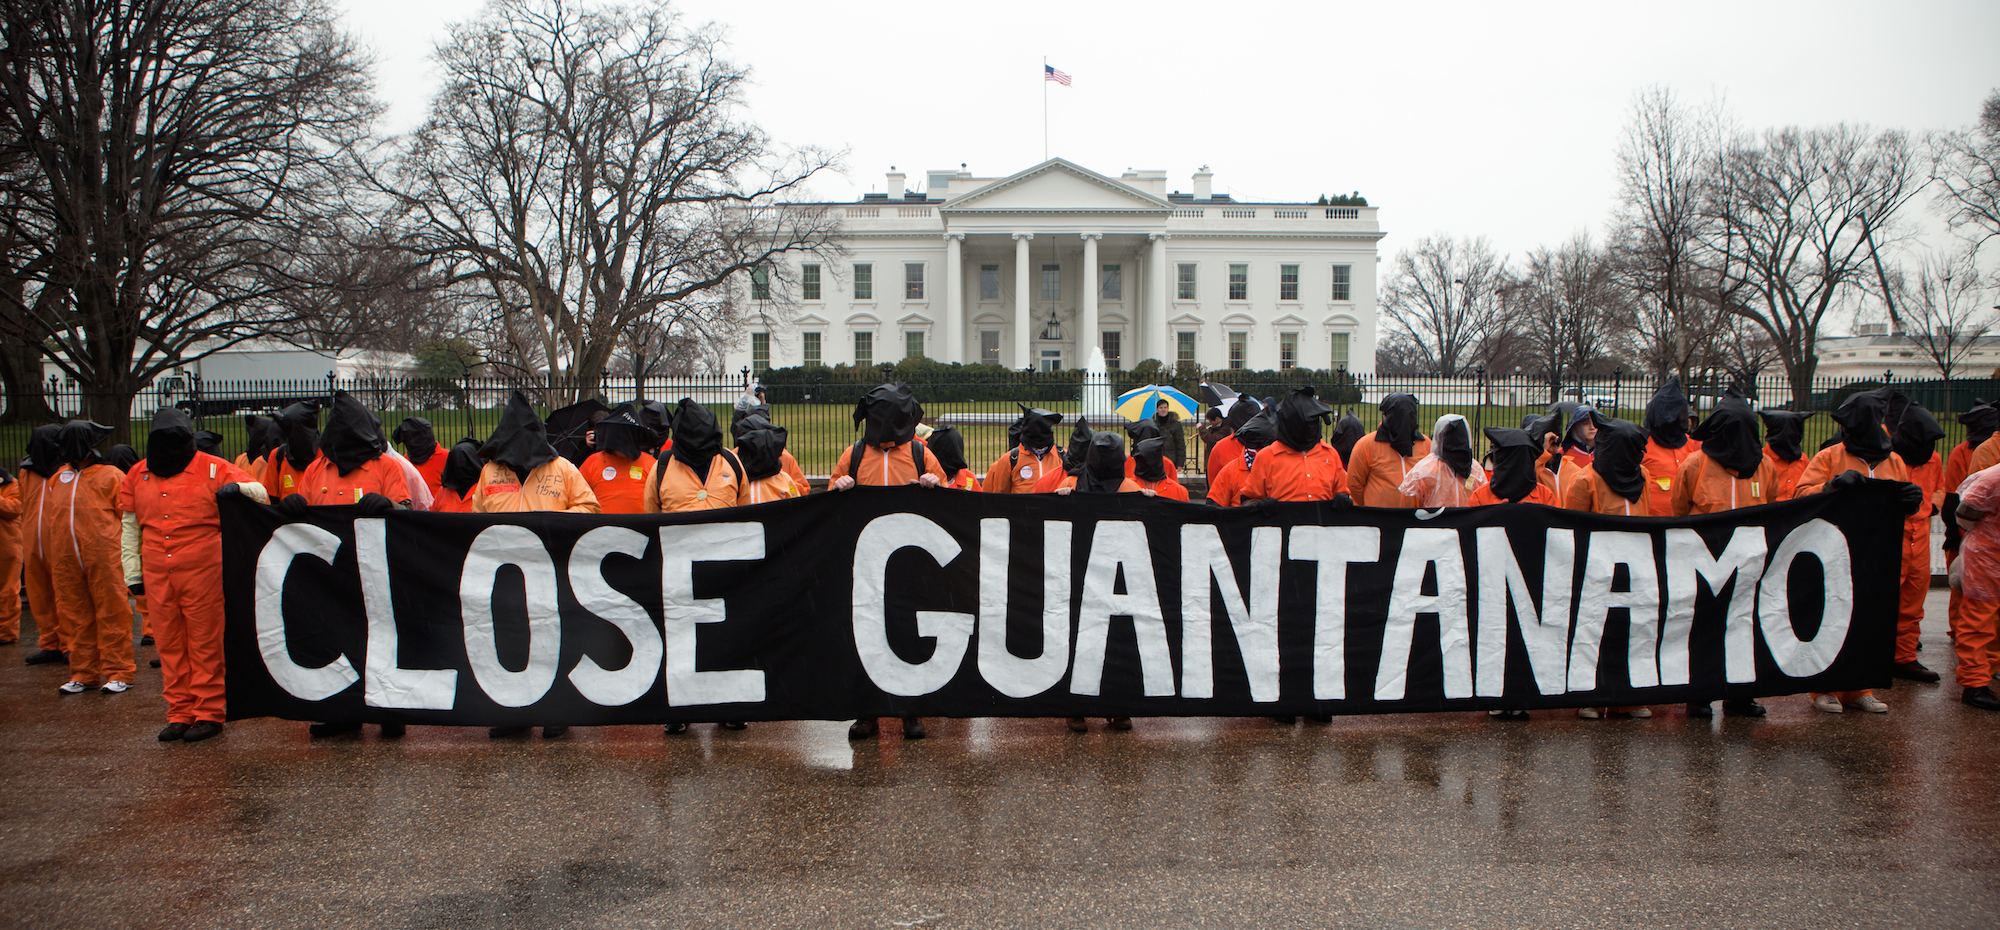 10 years of Guantanamo - Close Guantanamo Now